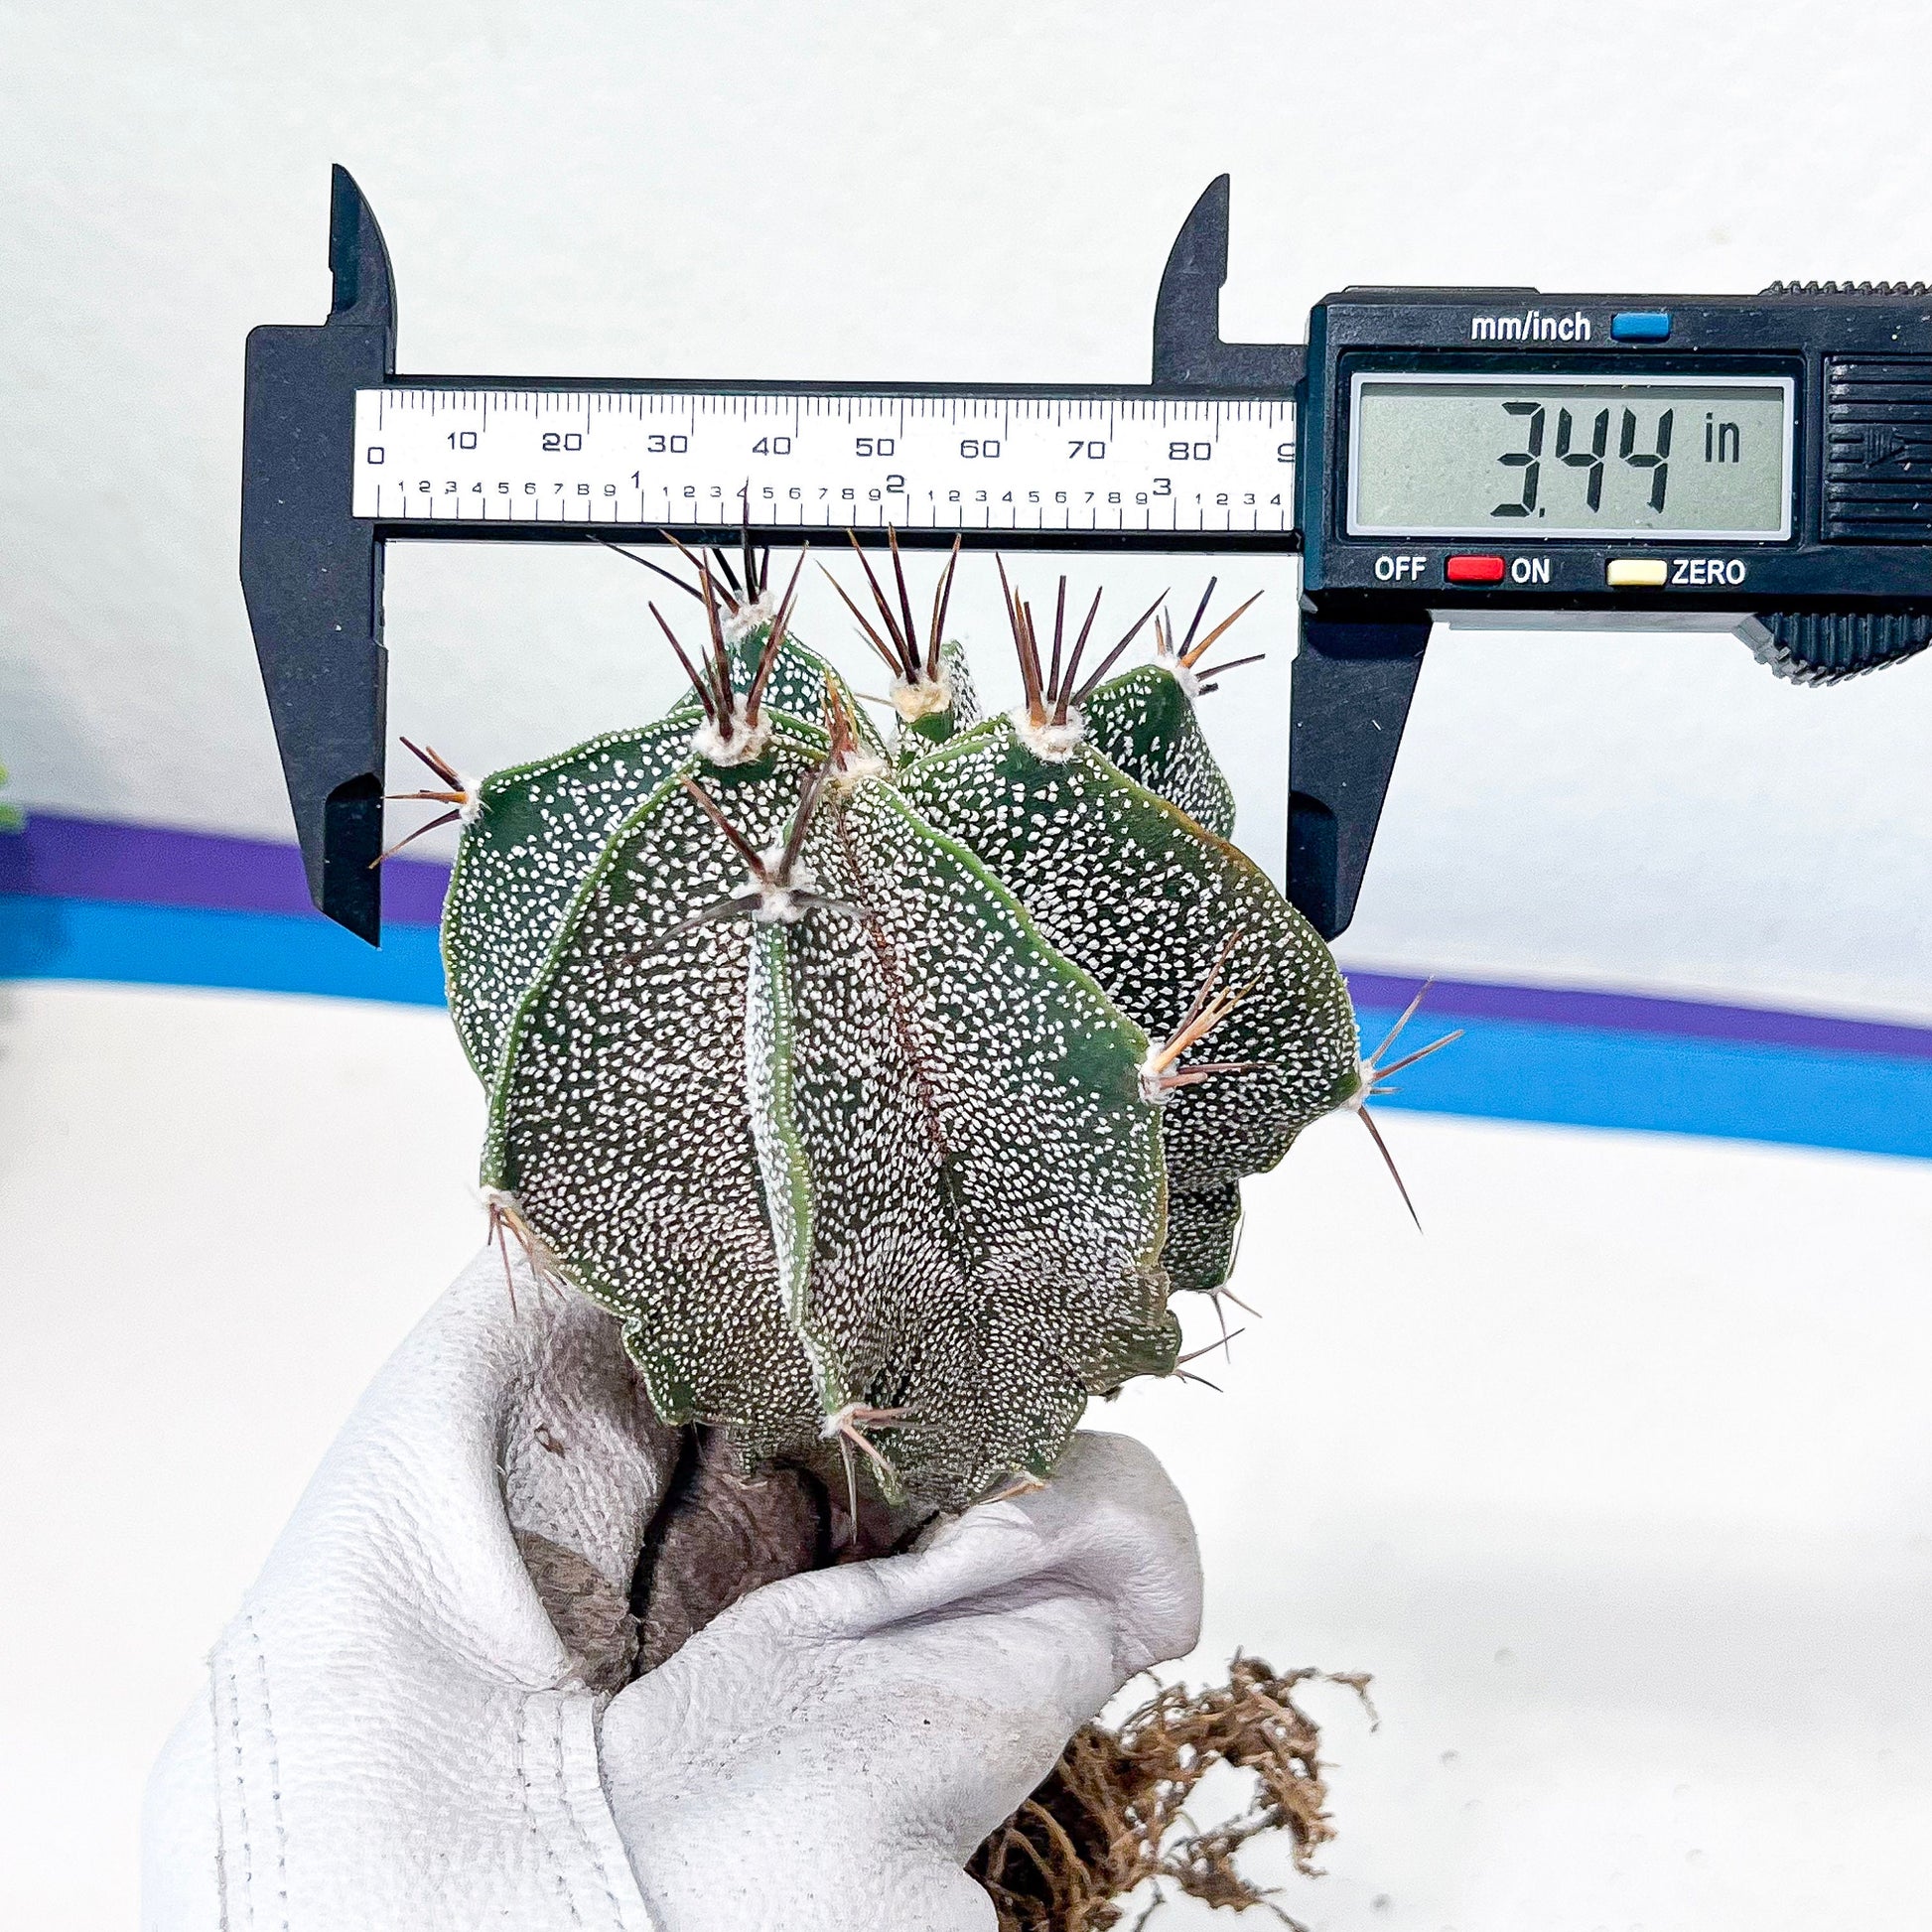 Large Ornatum Cactus(#V9) | Low Maintenance Plant | Desert Plants | Very Rare Import